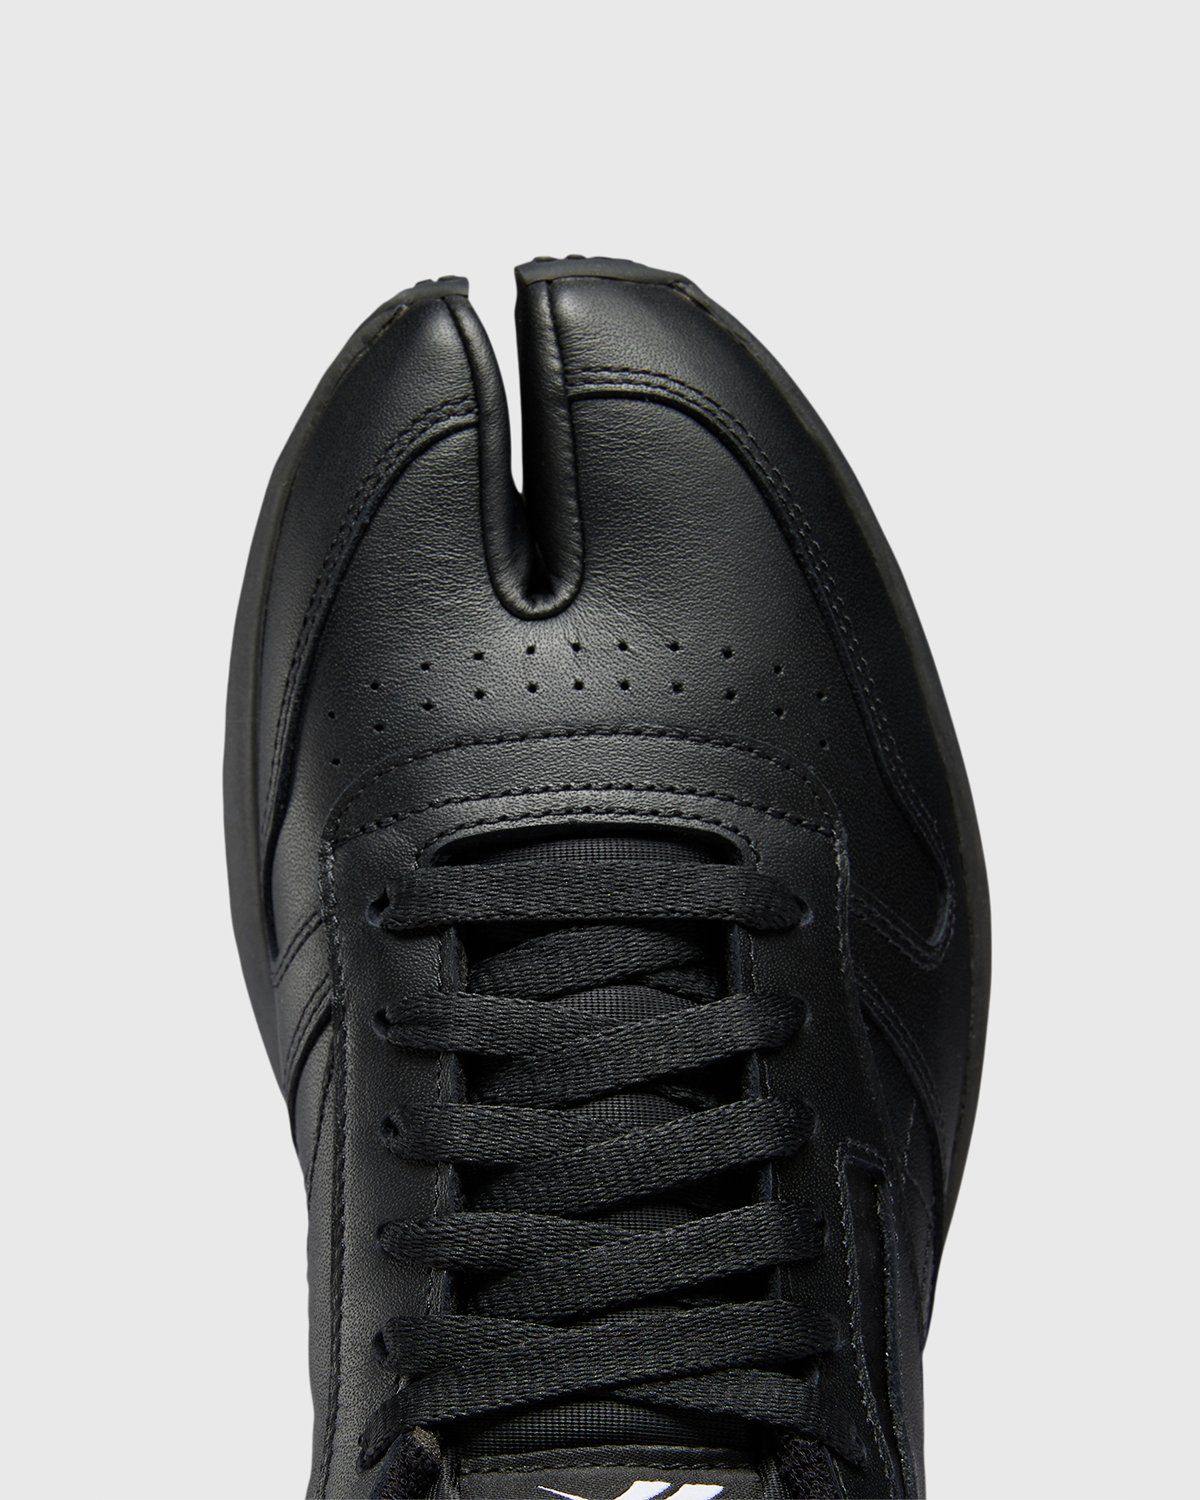 Maison Margiela x Reebok – Classic Leather Tabi Black - Low Top Sneakers - Black - Image 4